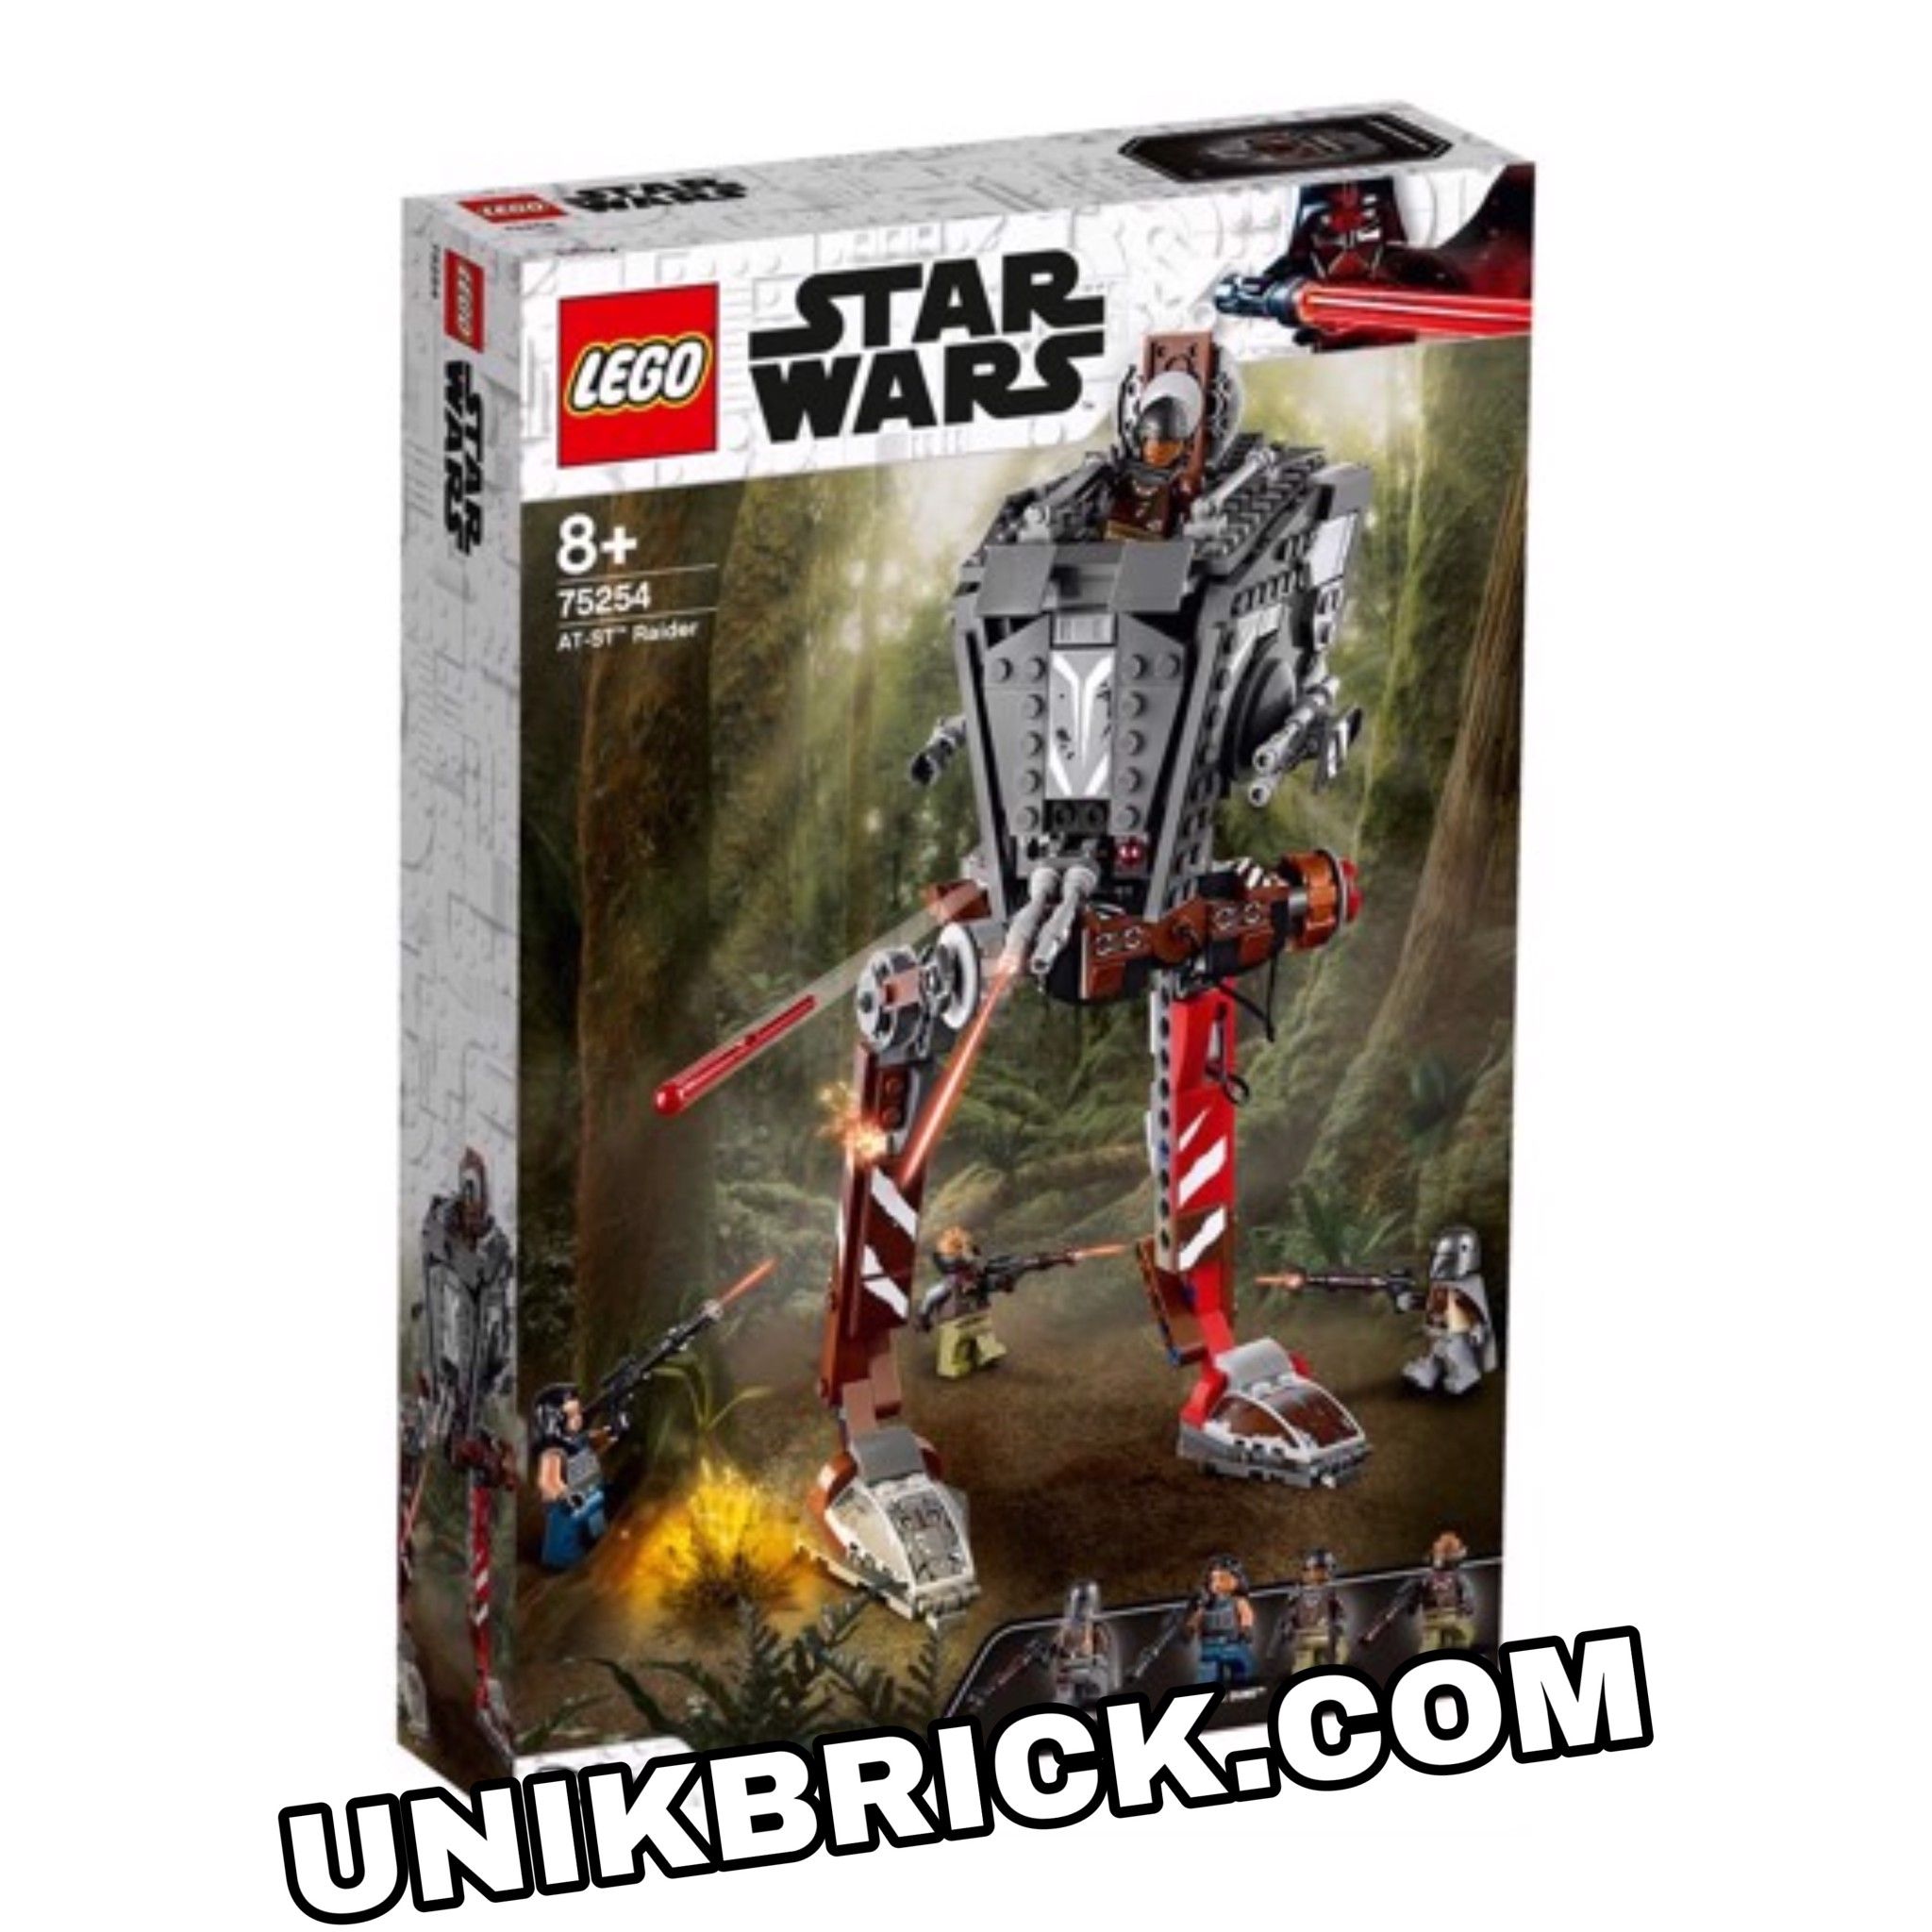 [CÓ HÀNG] LEGO Star Wars 75254 AT-ST Raider